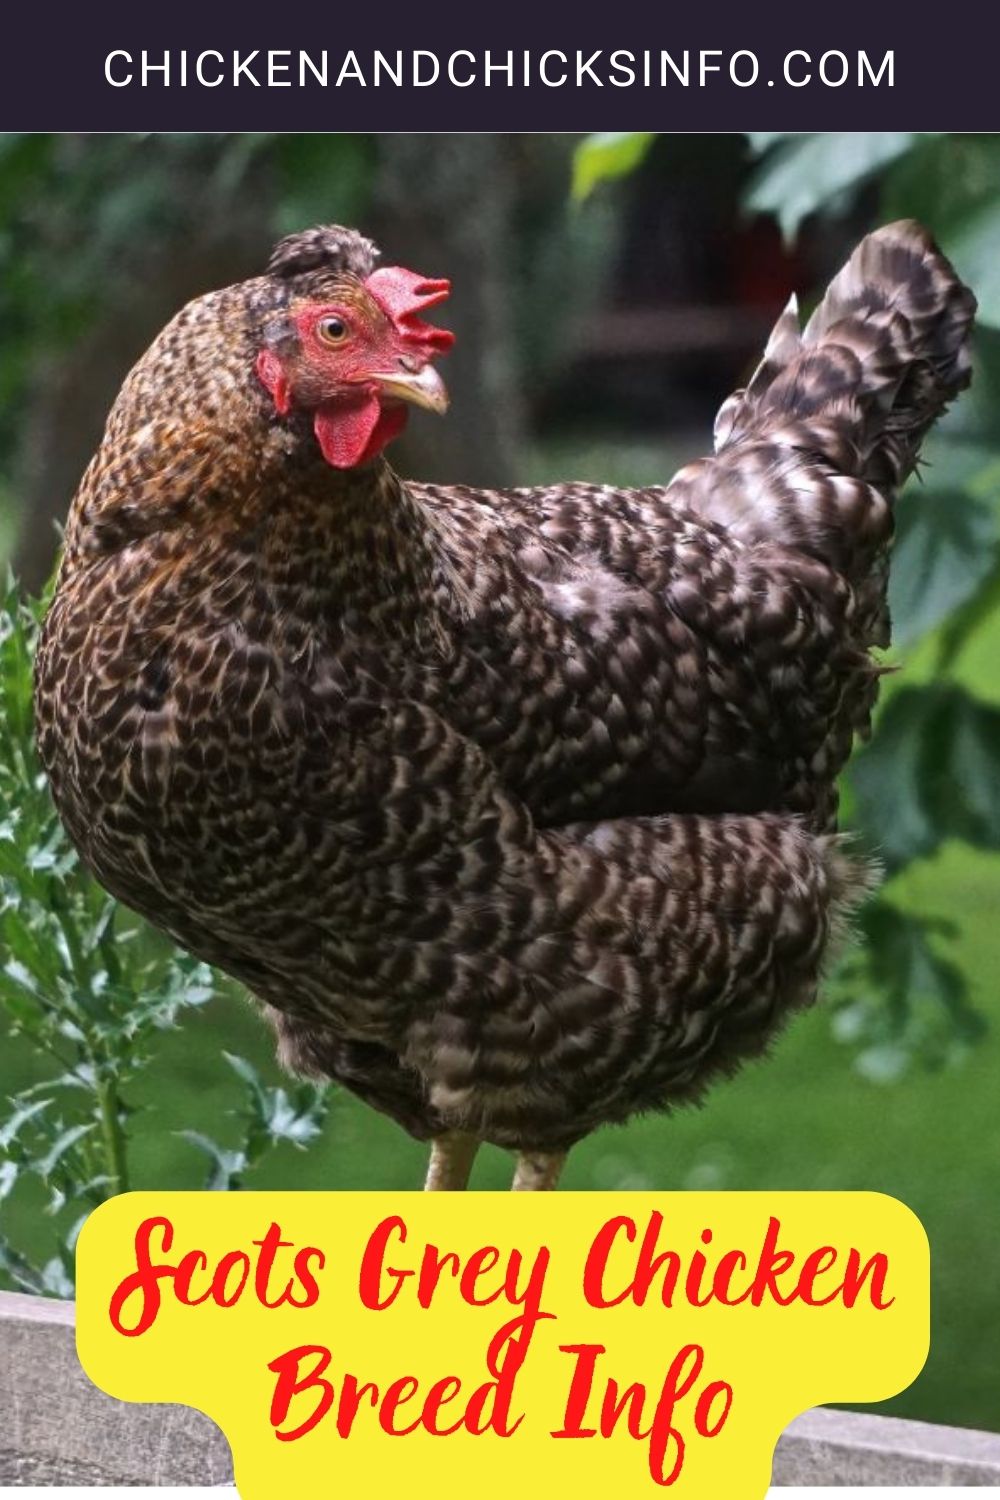 Scots Grey Chicken Breed Info pinterest image.